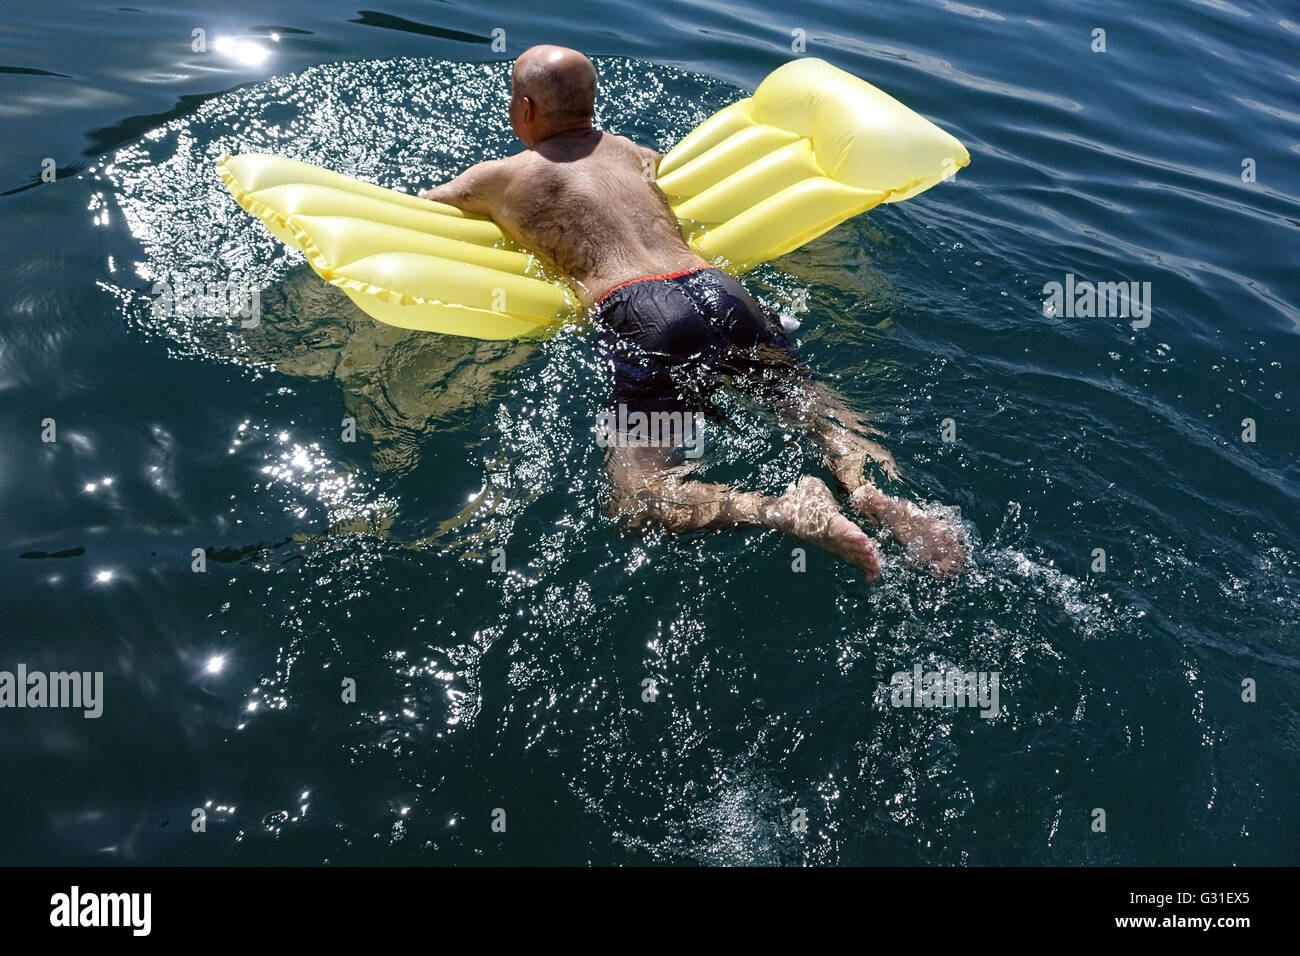 Air mattress lake hi-res stock photography and images - Alamy